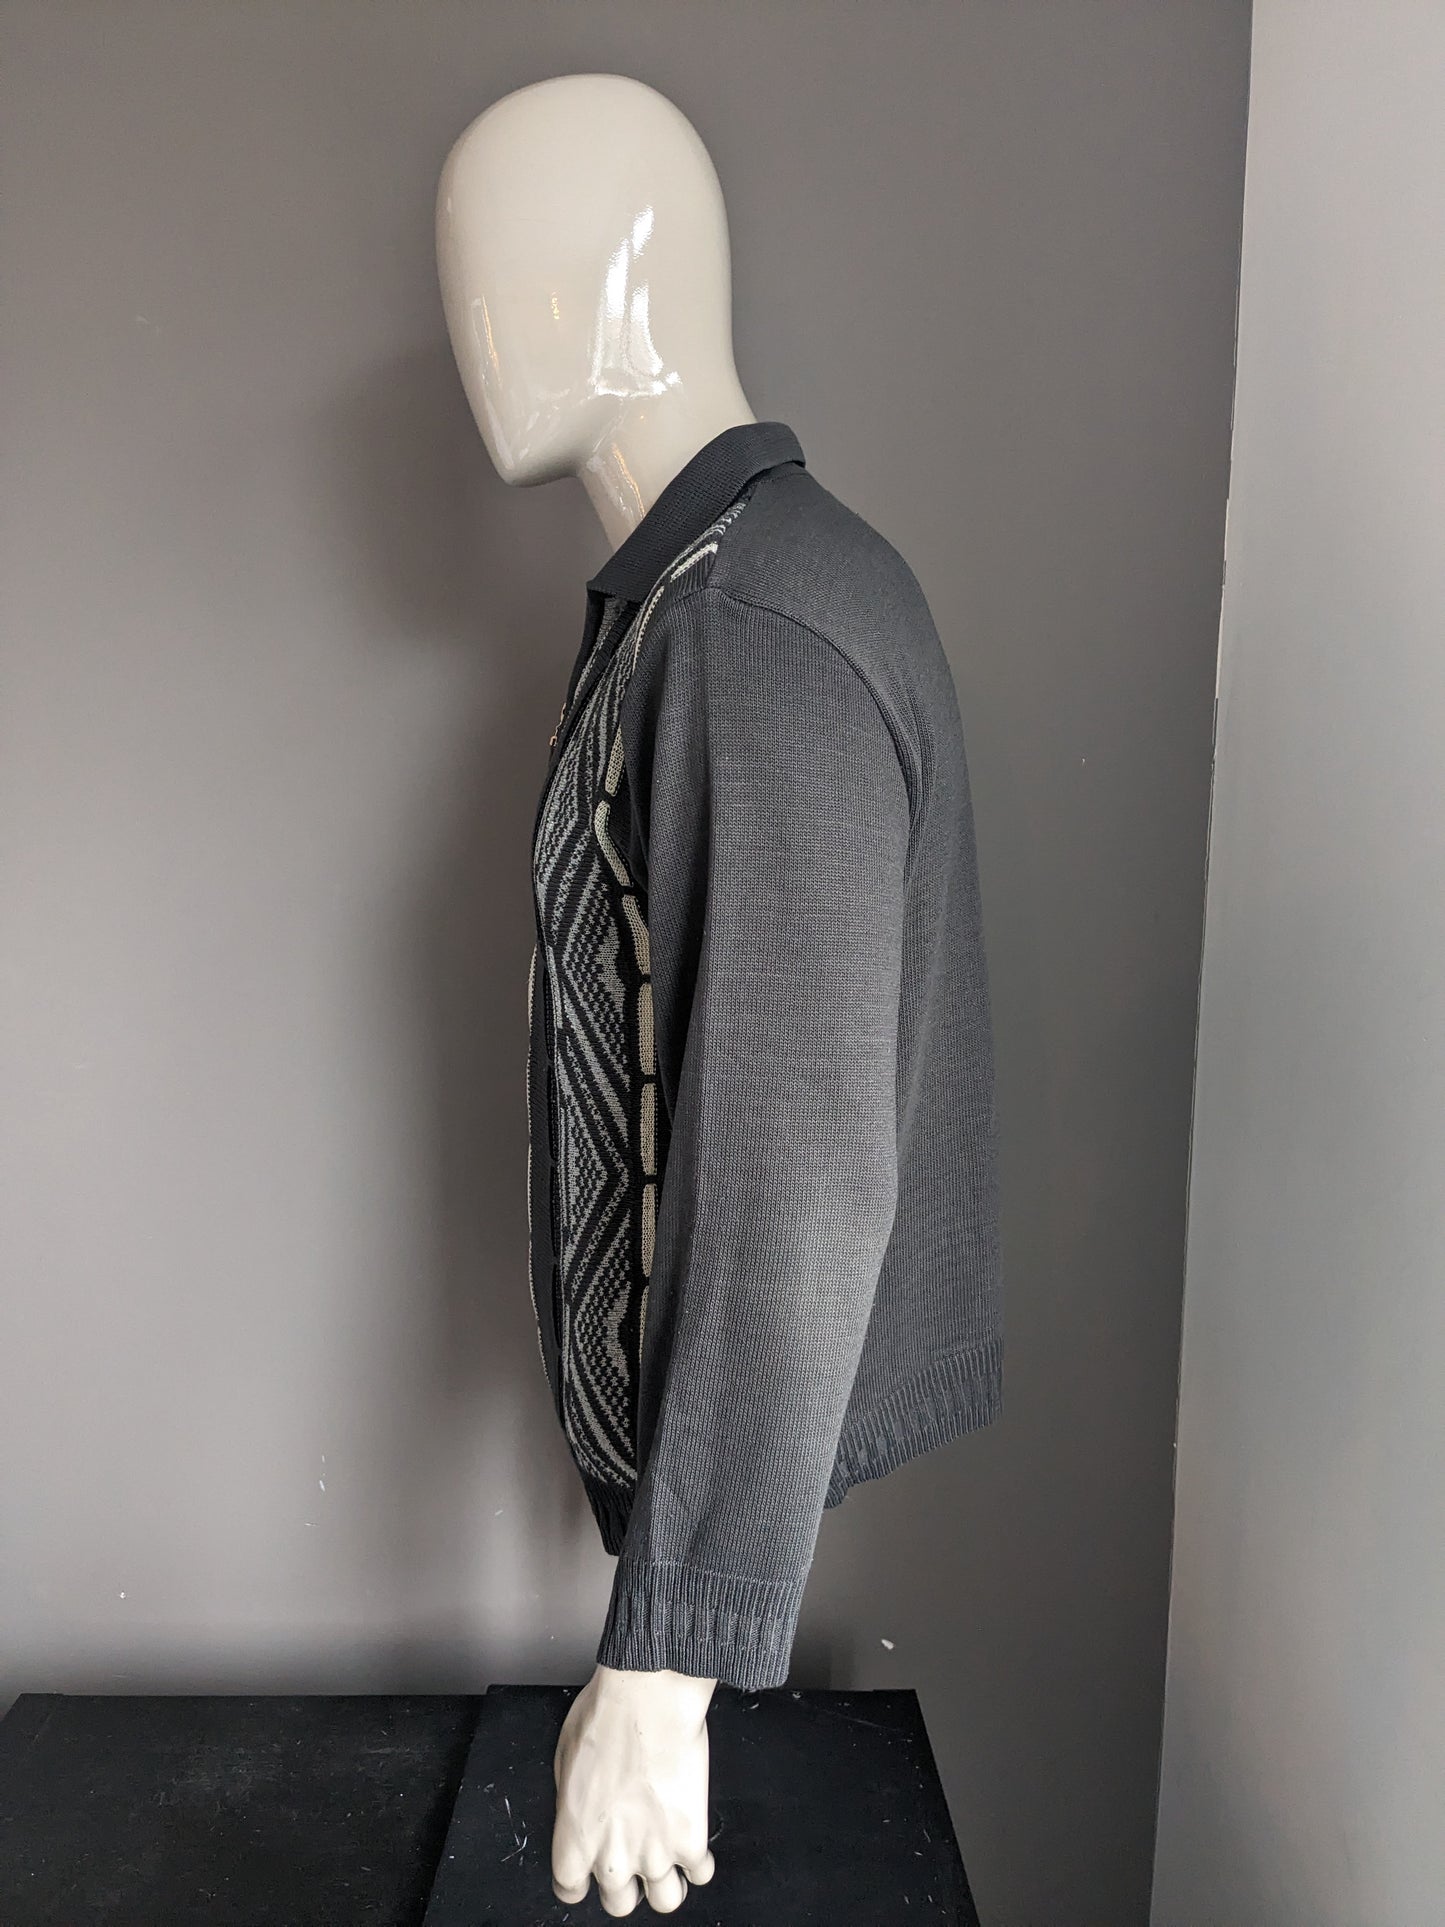 Suéter de sonne vintage con cremallera. Gray Beige de color negro. Talla L.